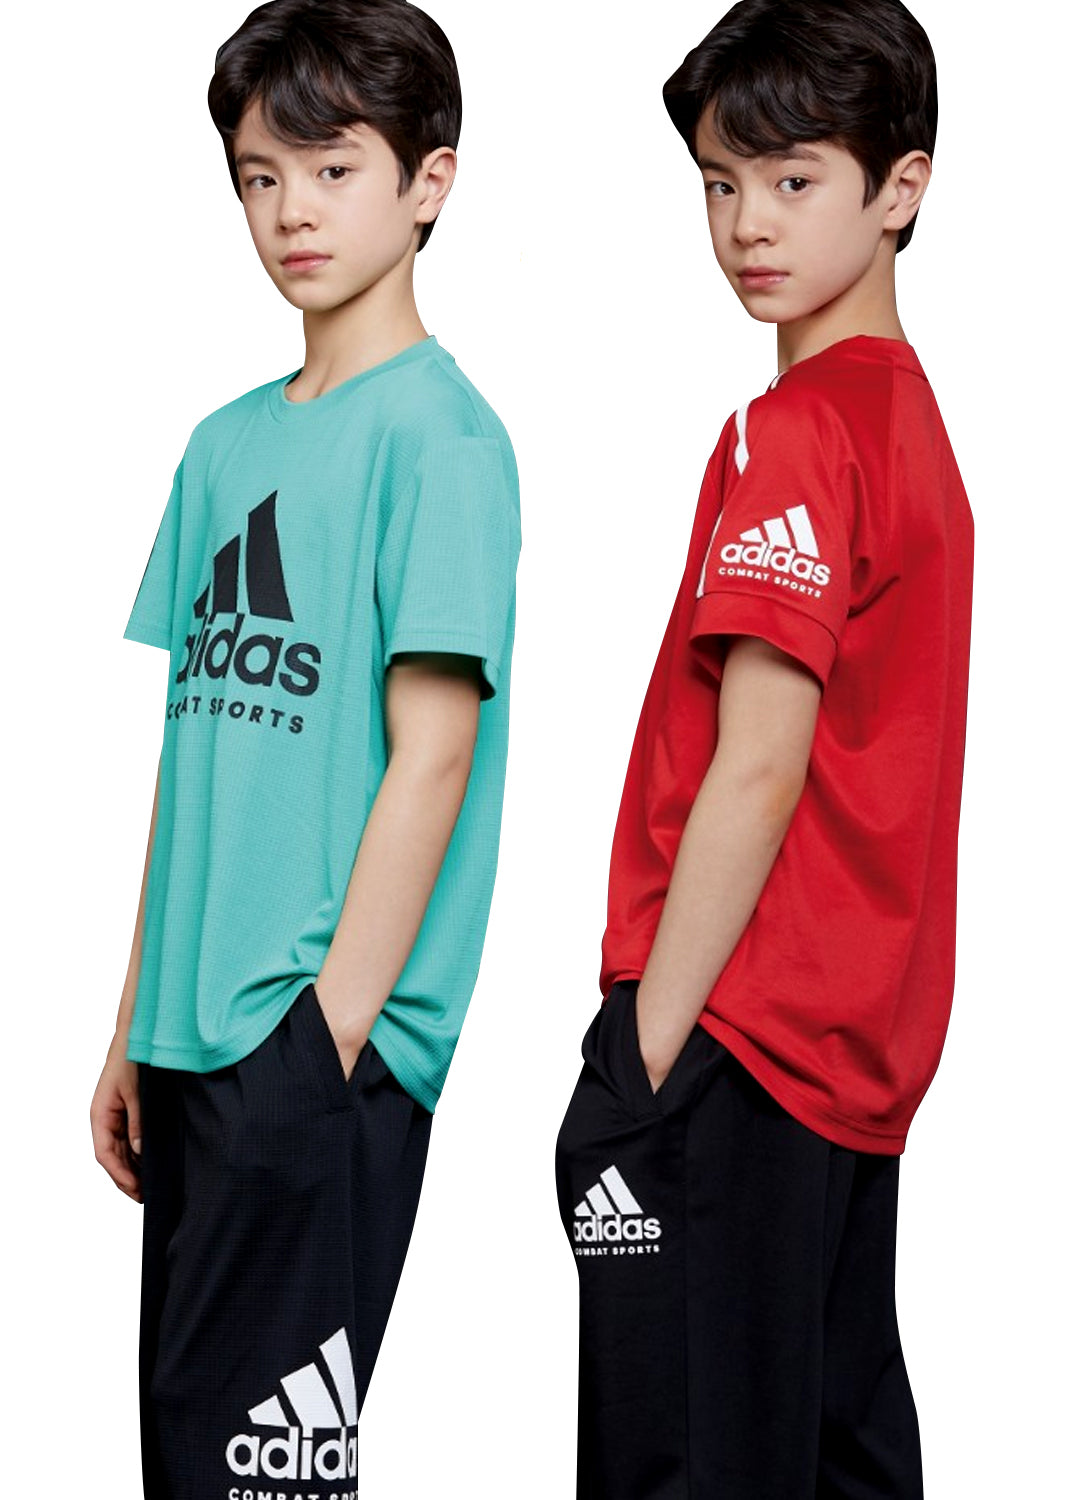 adidas Youth Summer Teamwear - 4pc Set